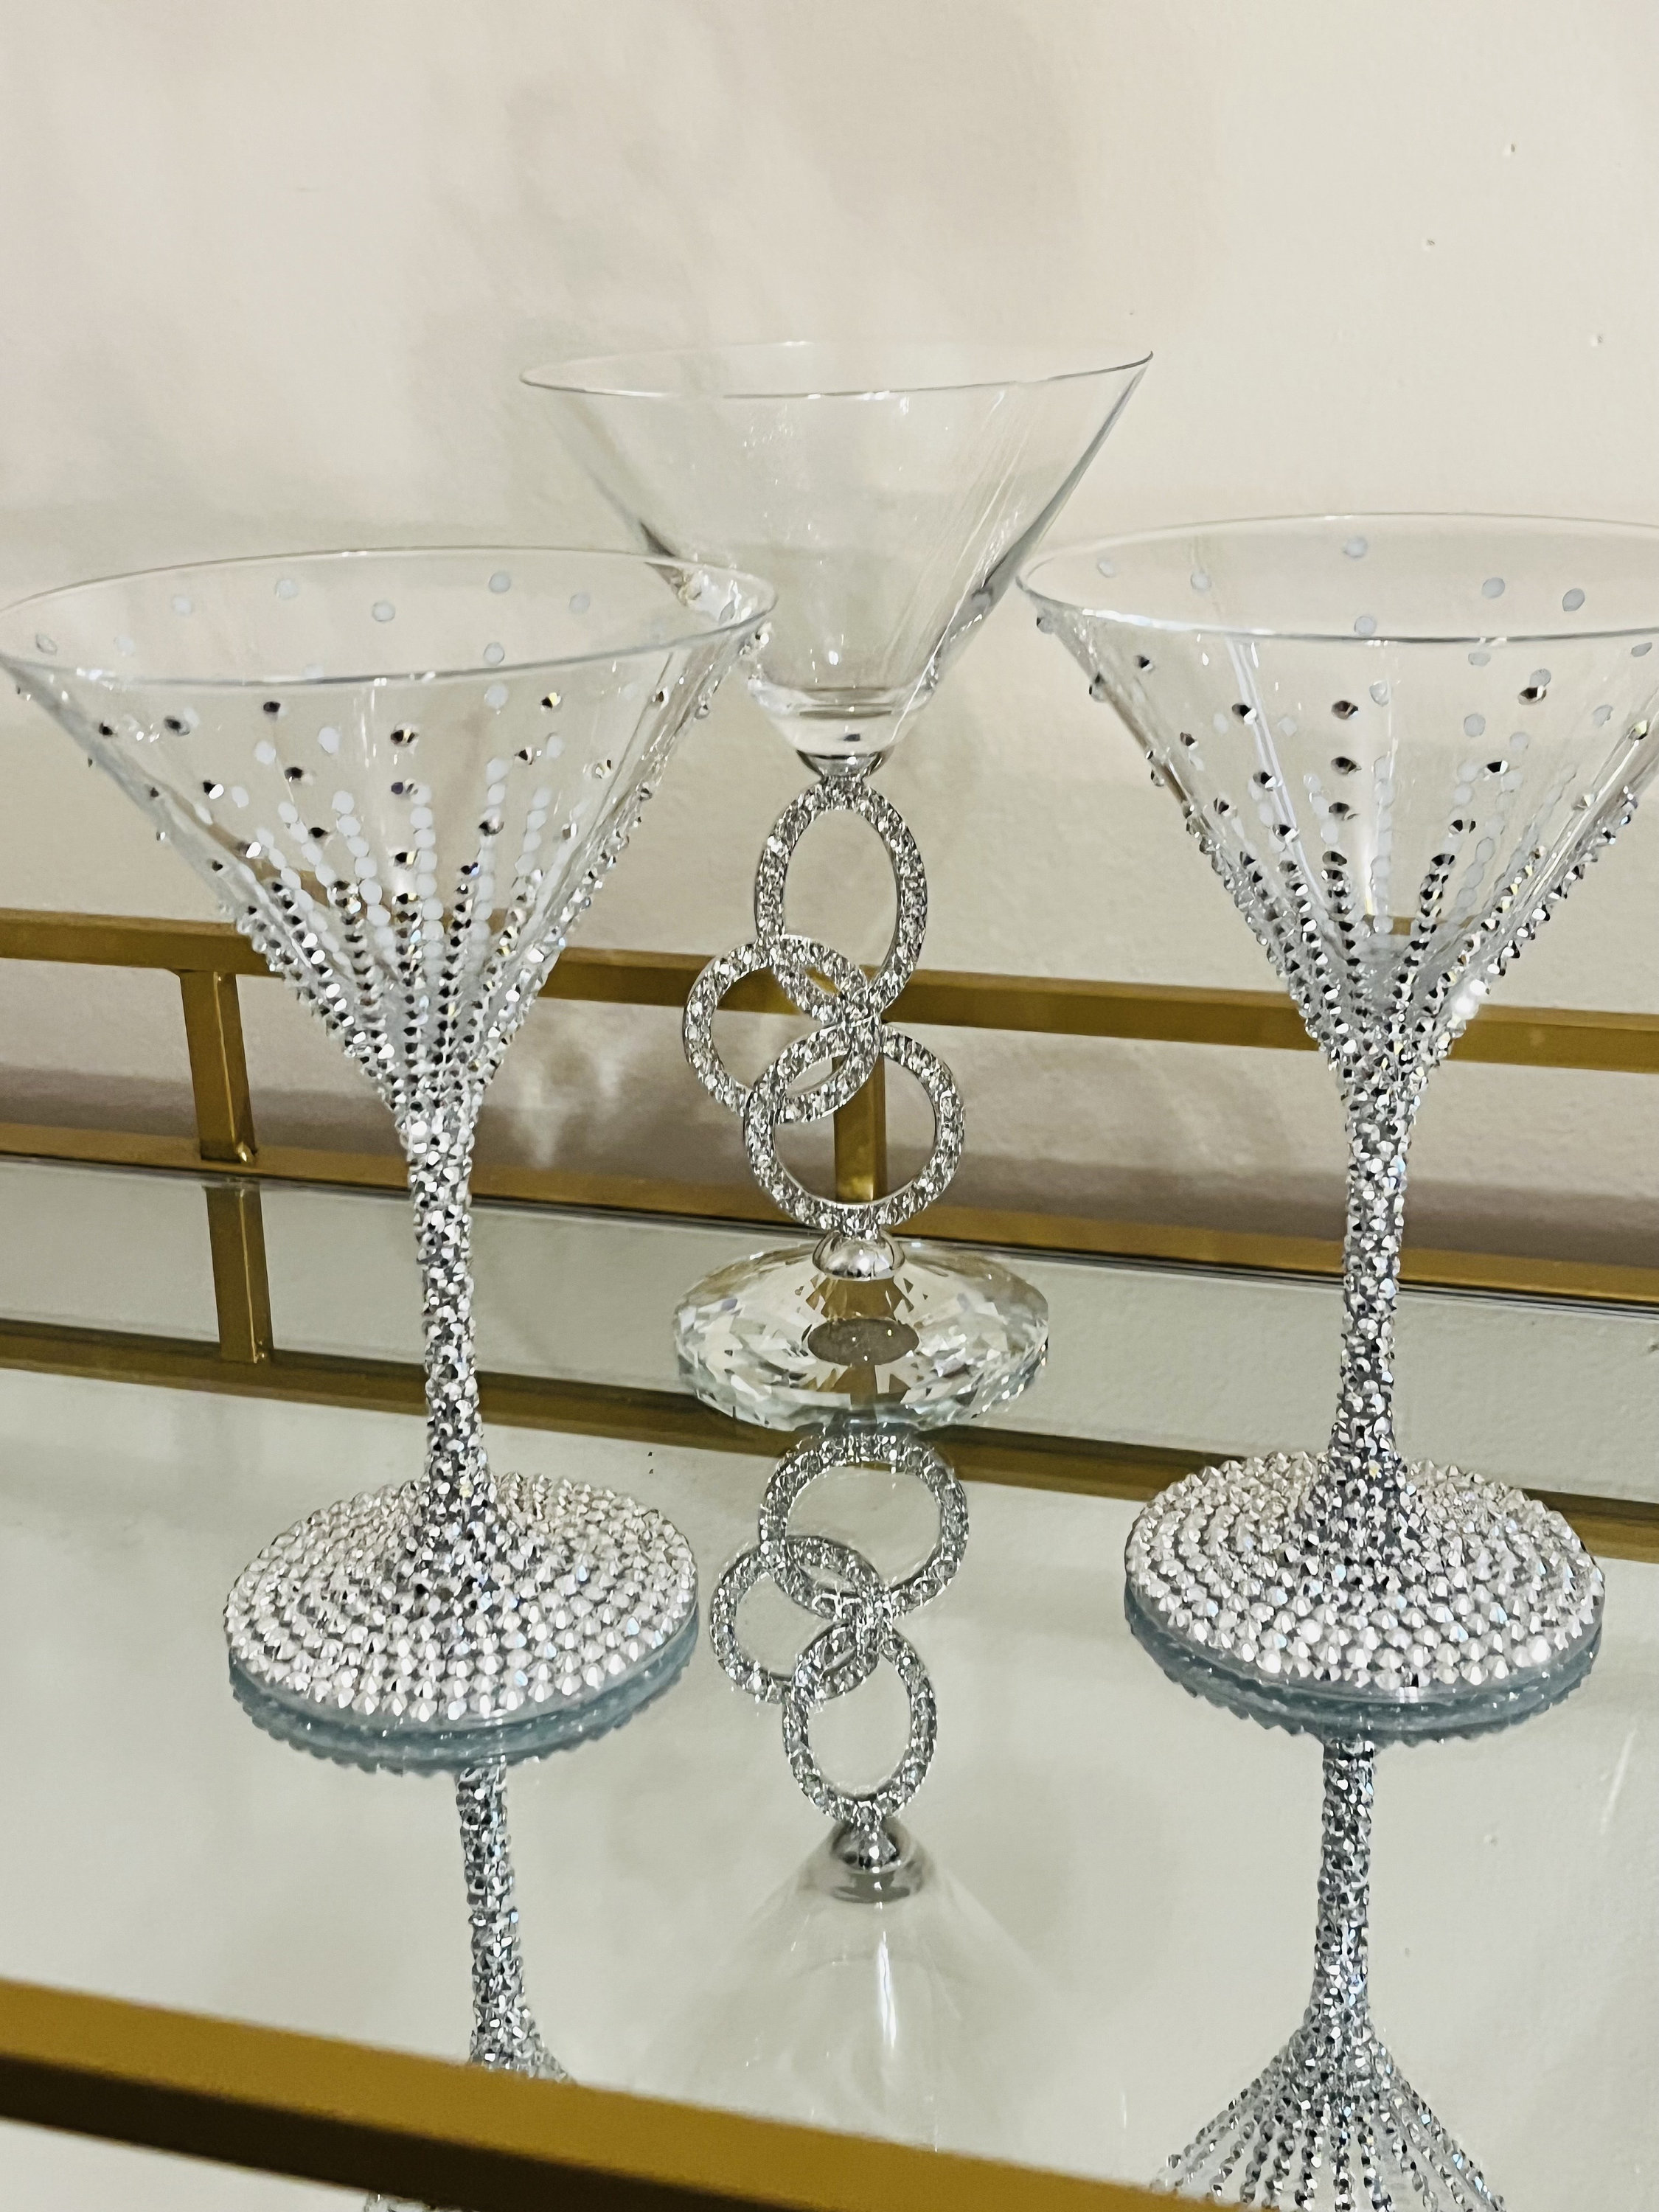 Diamond Studded Martini Glasses - Set of 2, Modern Cocktail Glass,Sparkling  Rhinestone Diamonds Stem…See more Diamond Studded Martini Glasses - Set of